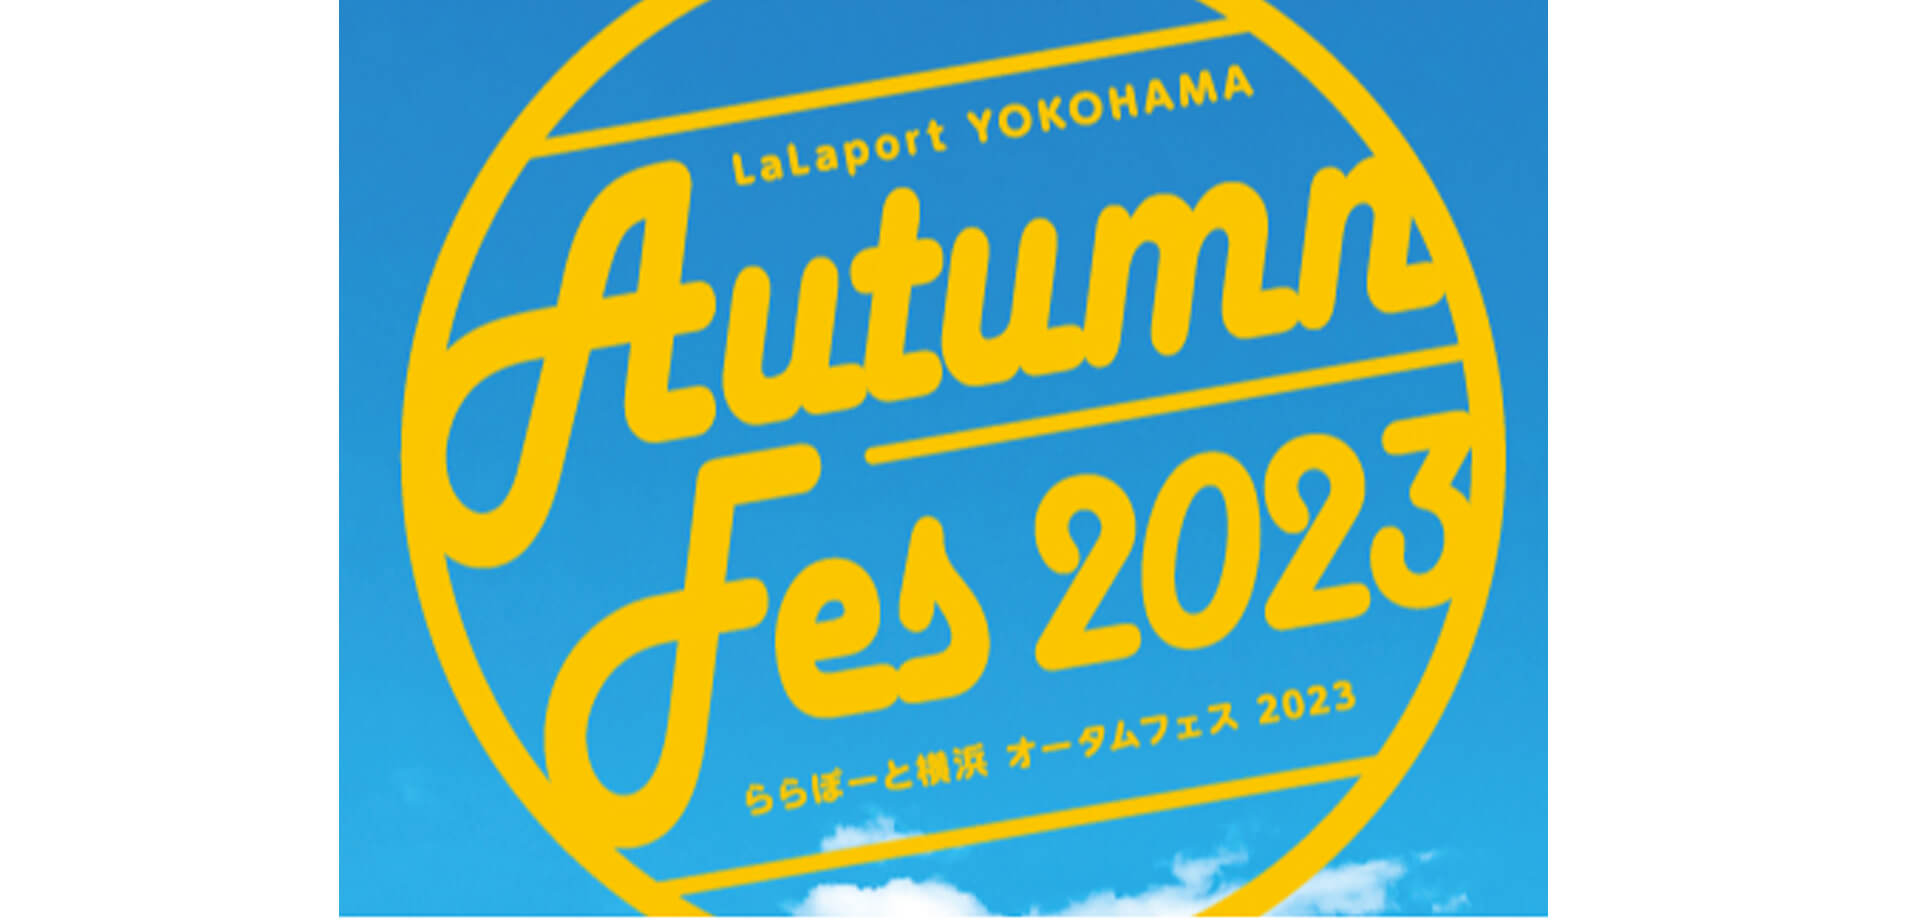 LaLaport YOKOHAMA・Autumn Fes 2023ロゴ